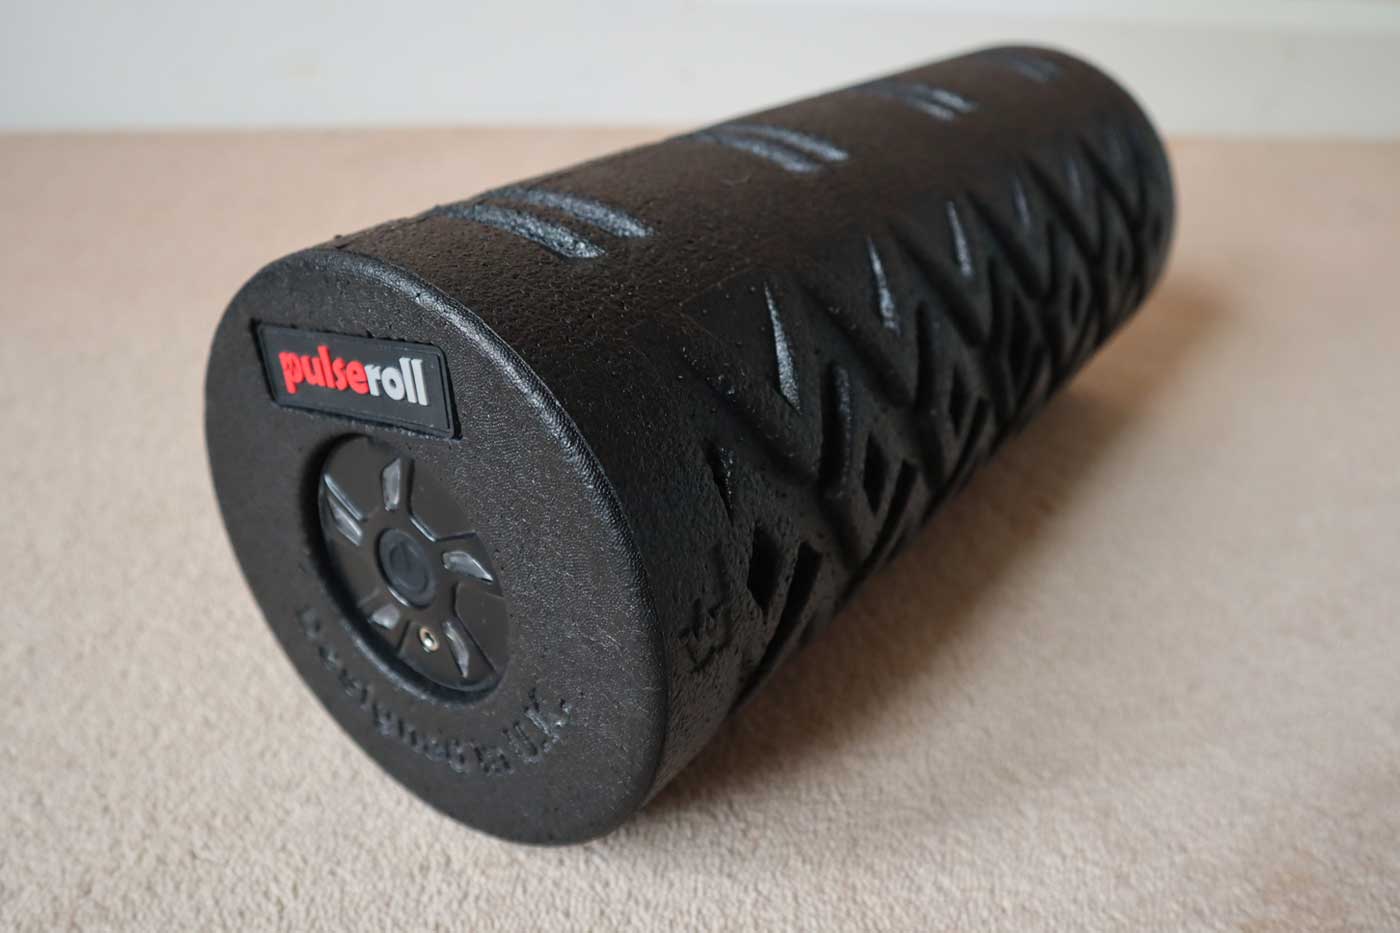 The tread pattern on the Pulseroll Vibrating Foam Roller Pro